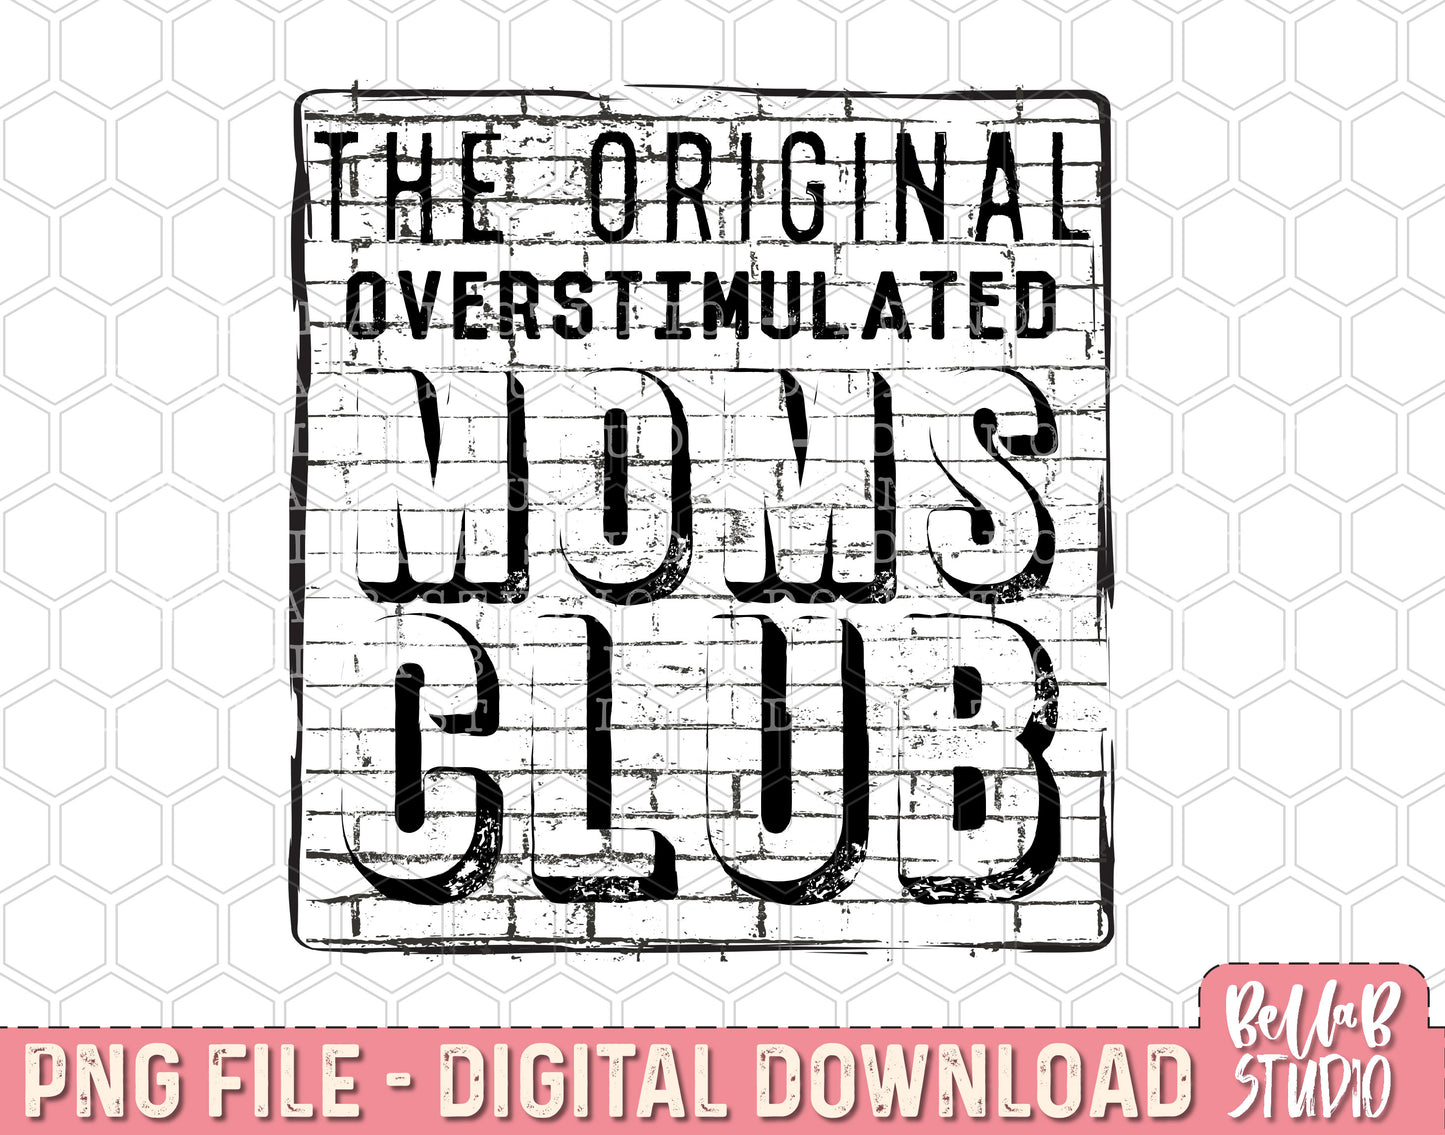 The Original Overstimulated Moms Club Brick PNG Sublimation Design